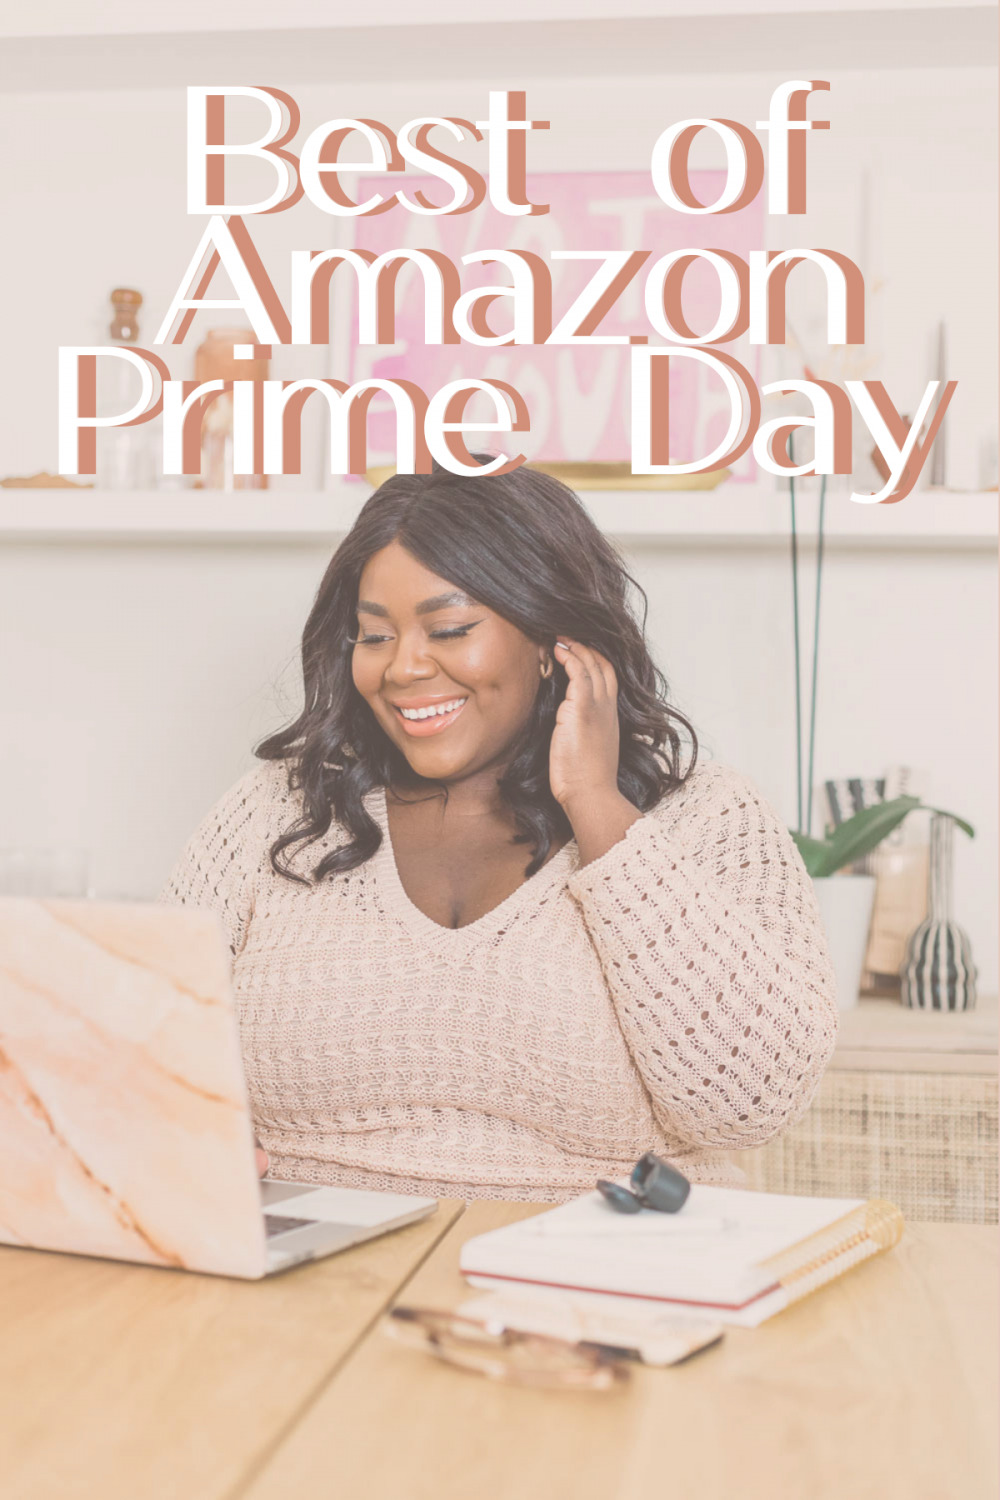 Best of Amazon Prime Day